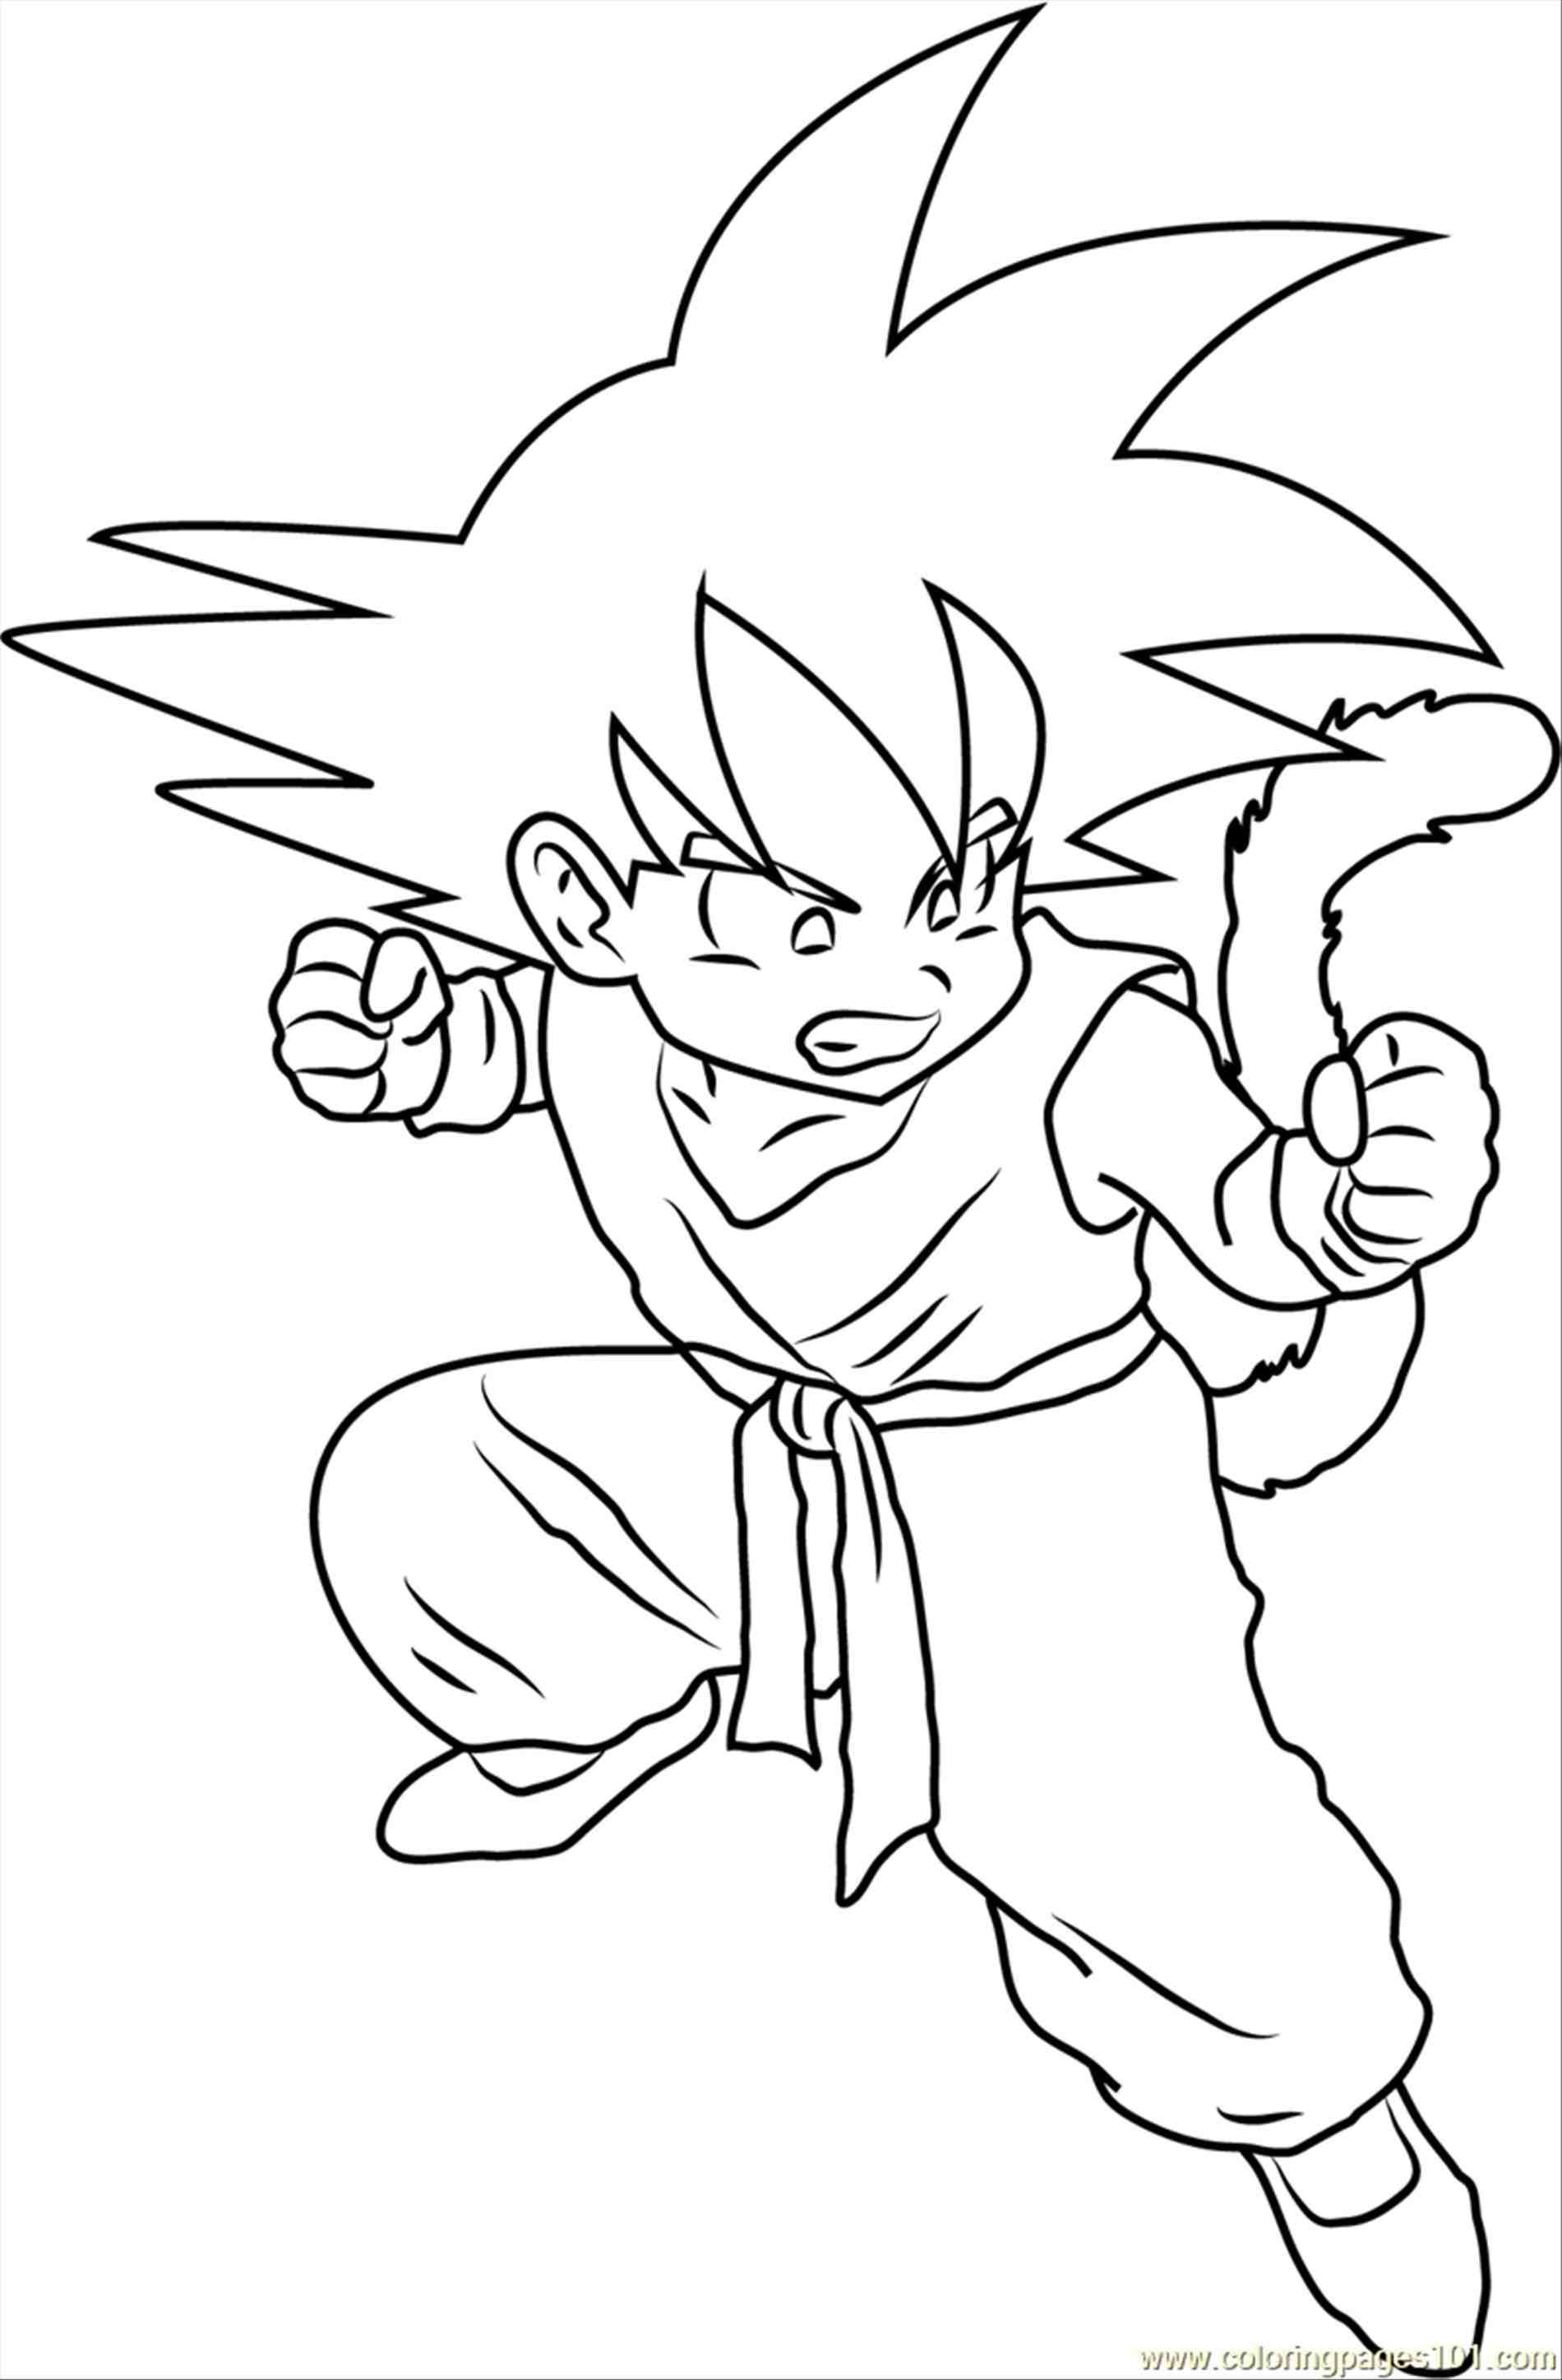 Kid Goku Coloring Pages at GetColorings.com | Free printable colorings